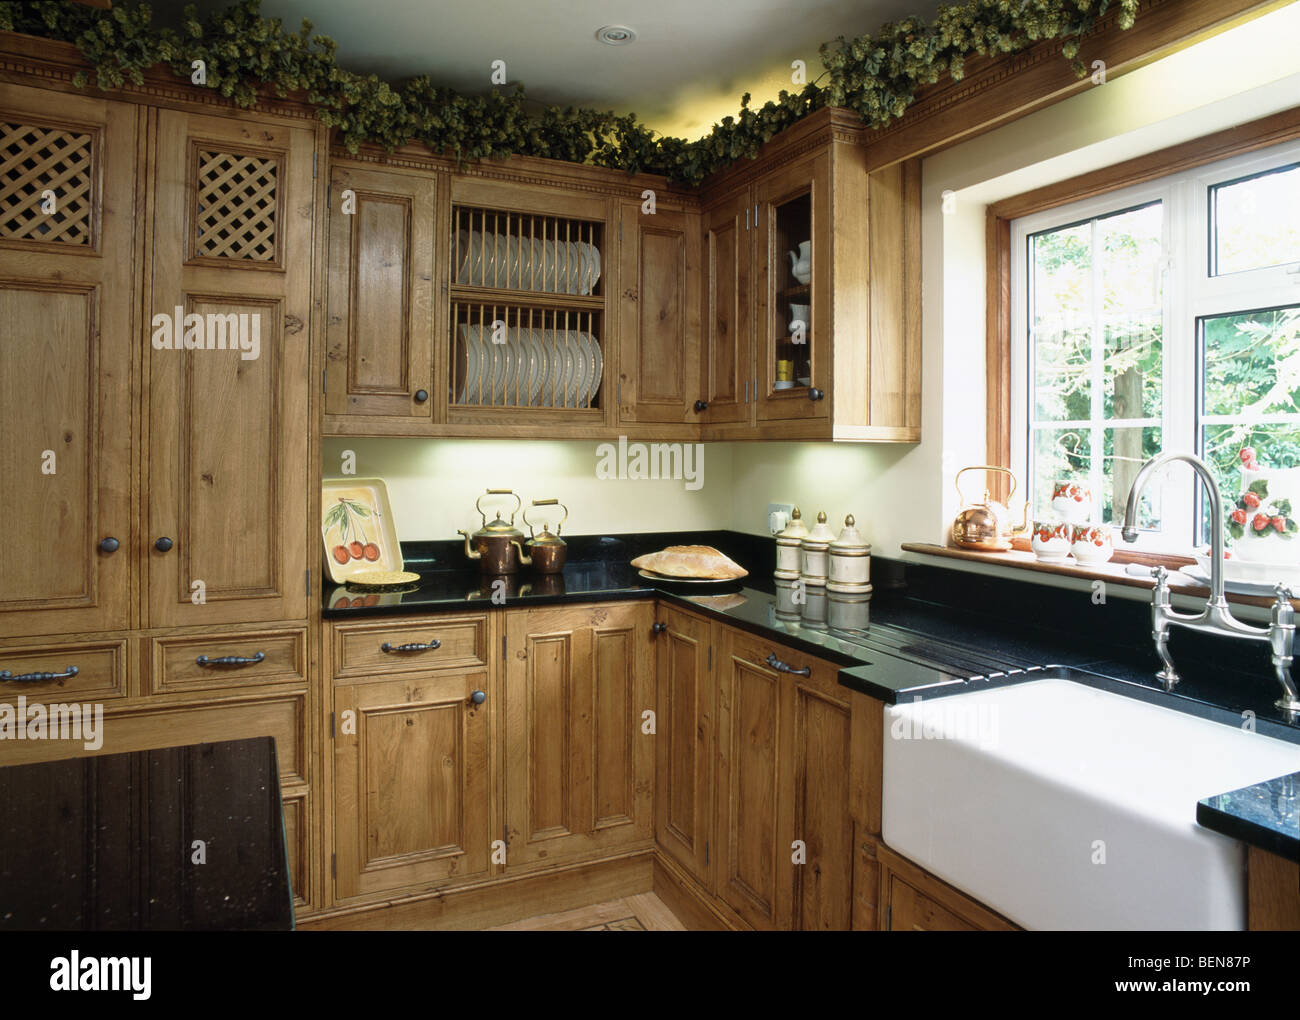 https://c8.alamy.com/comp/BEN87P/belfast-sink-below-window-in-country-kitchen-with-fitted-oak-units-BEN87P.jpg